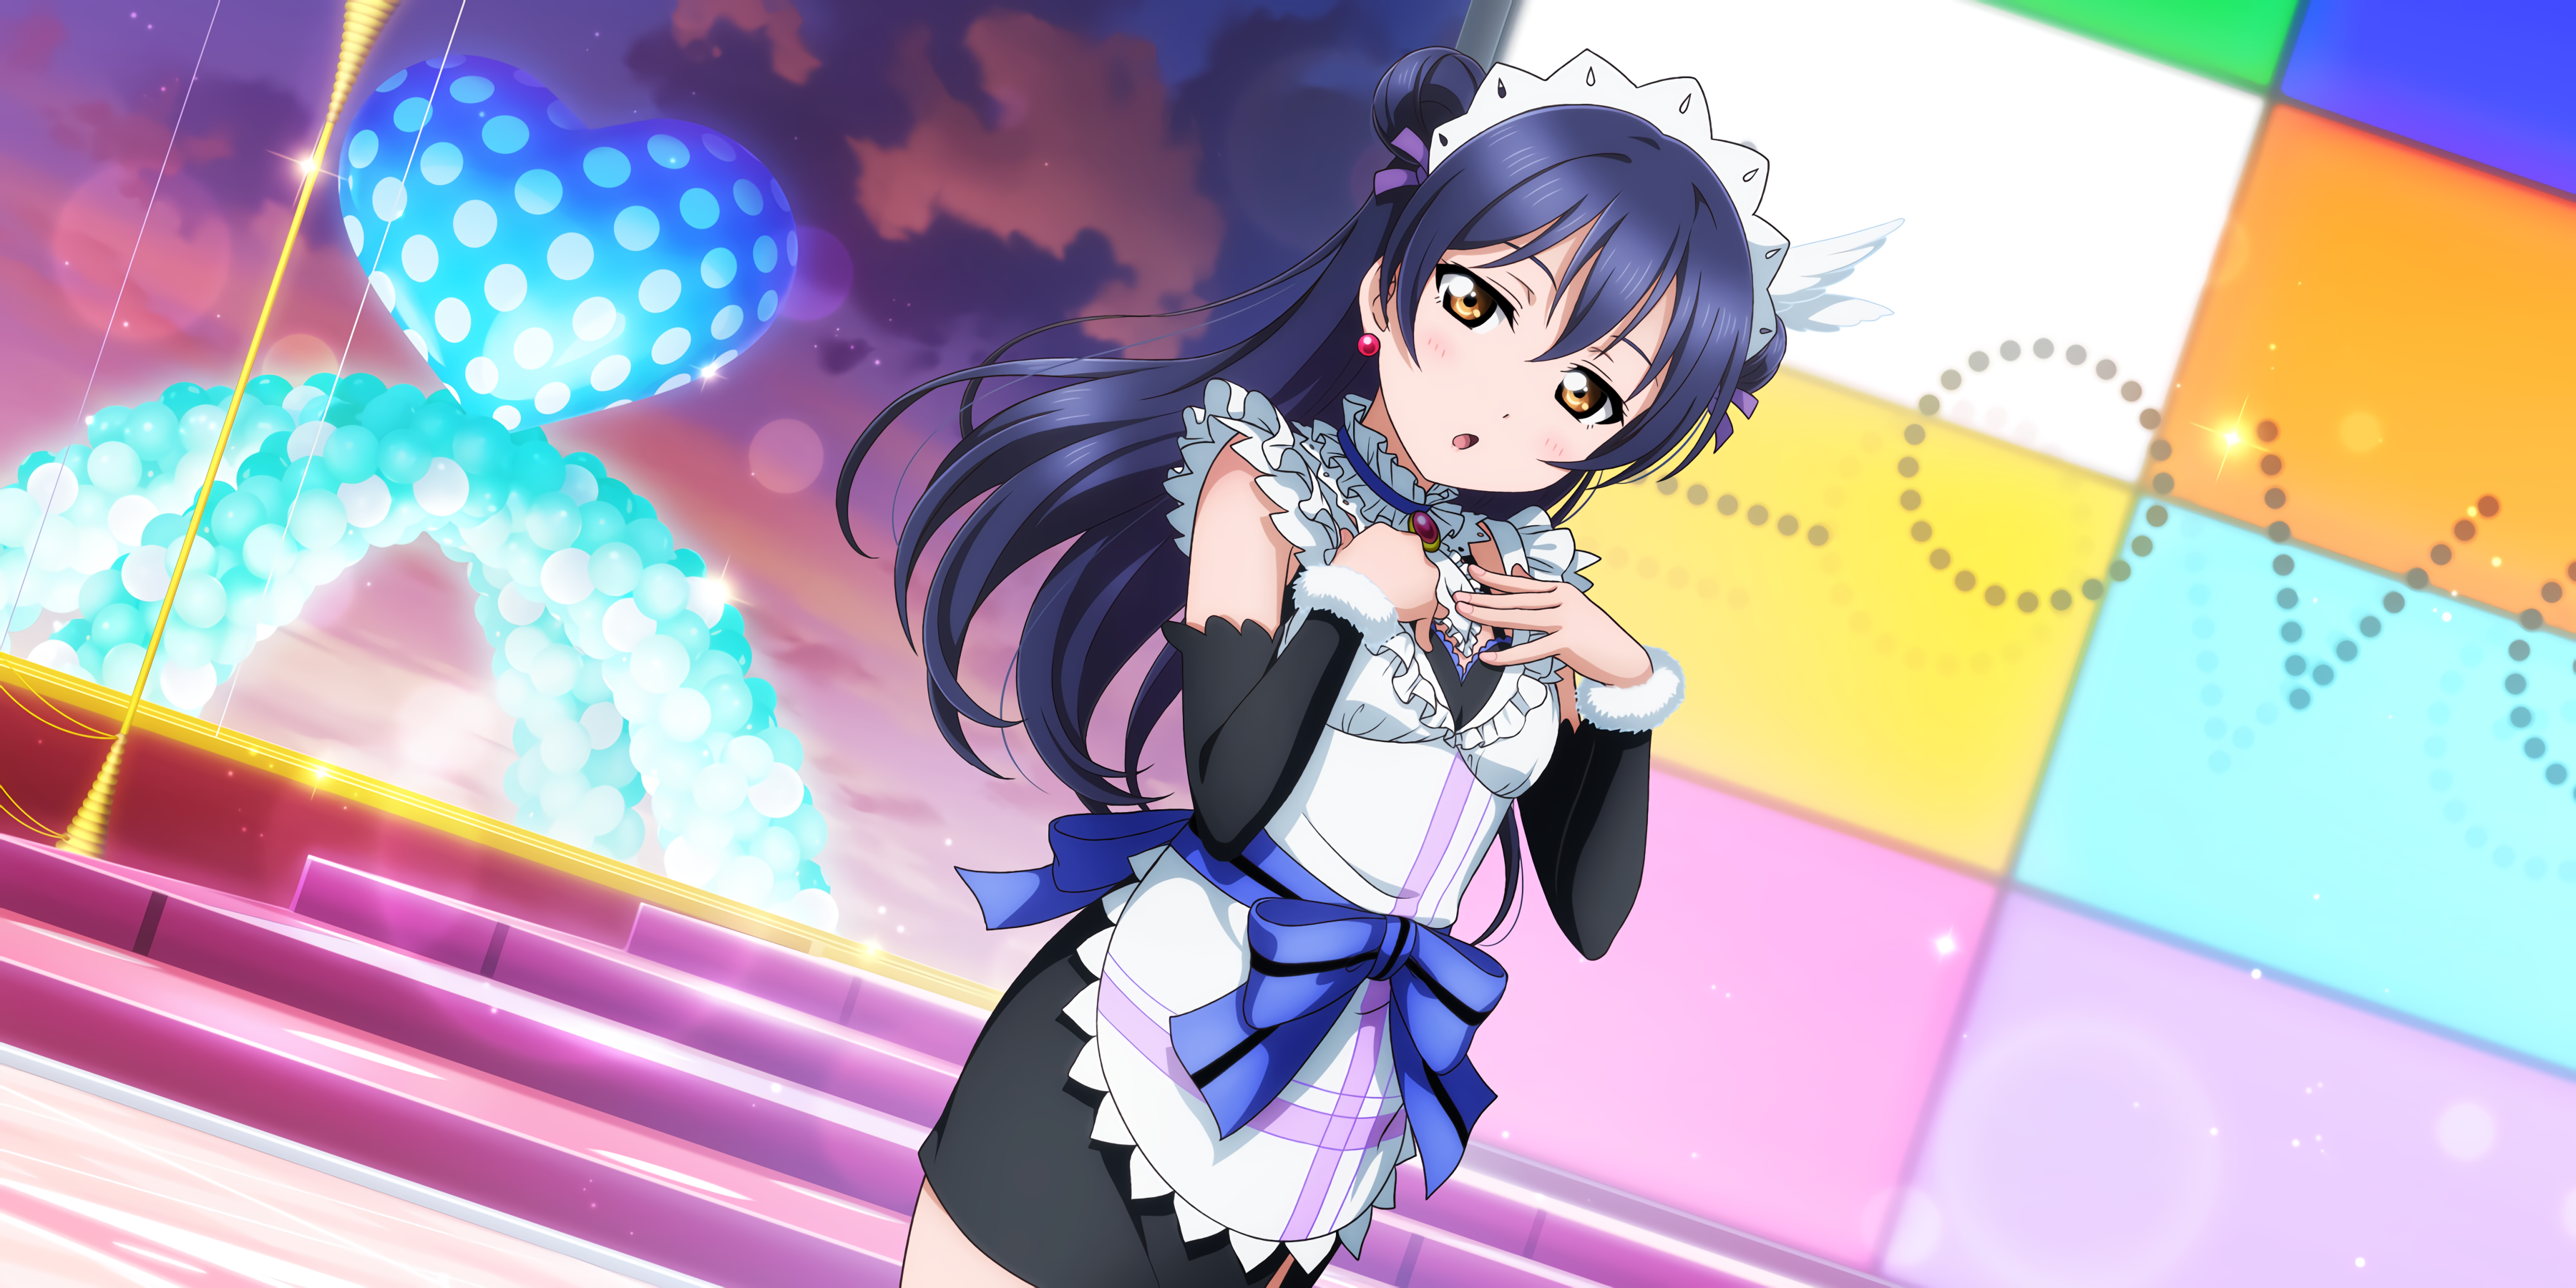 Anime 3600x1800 Love Live! Sonoda Umi anime girls maid outfit